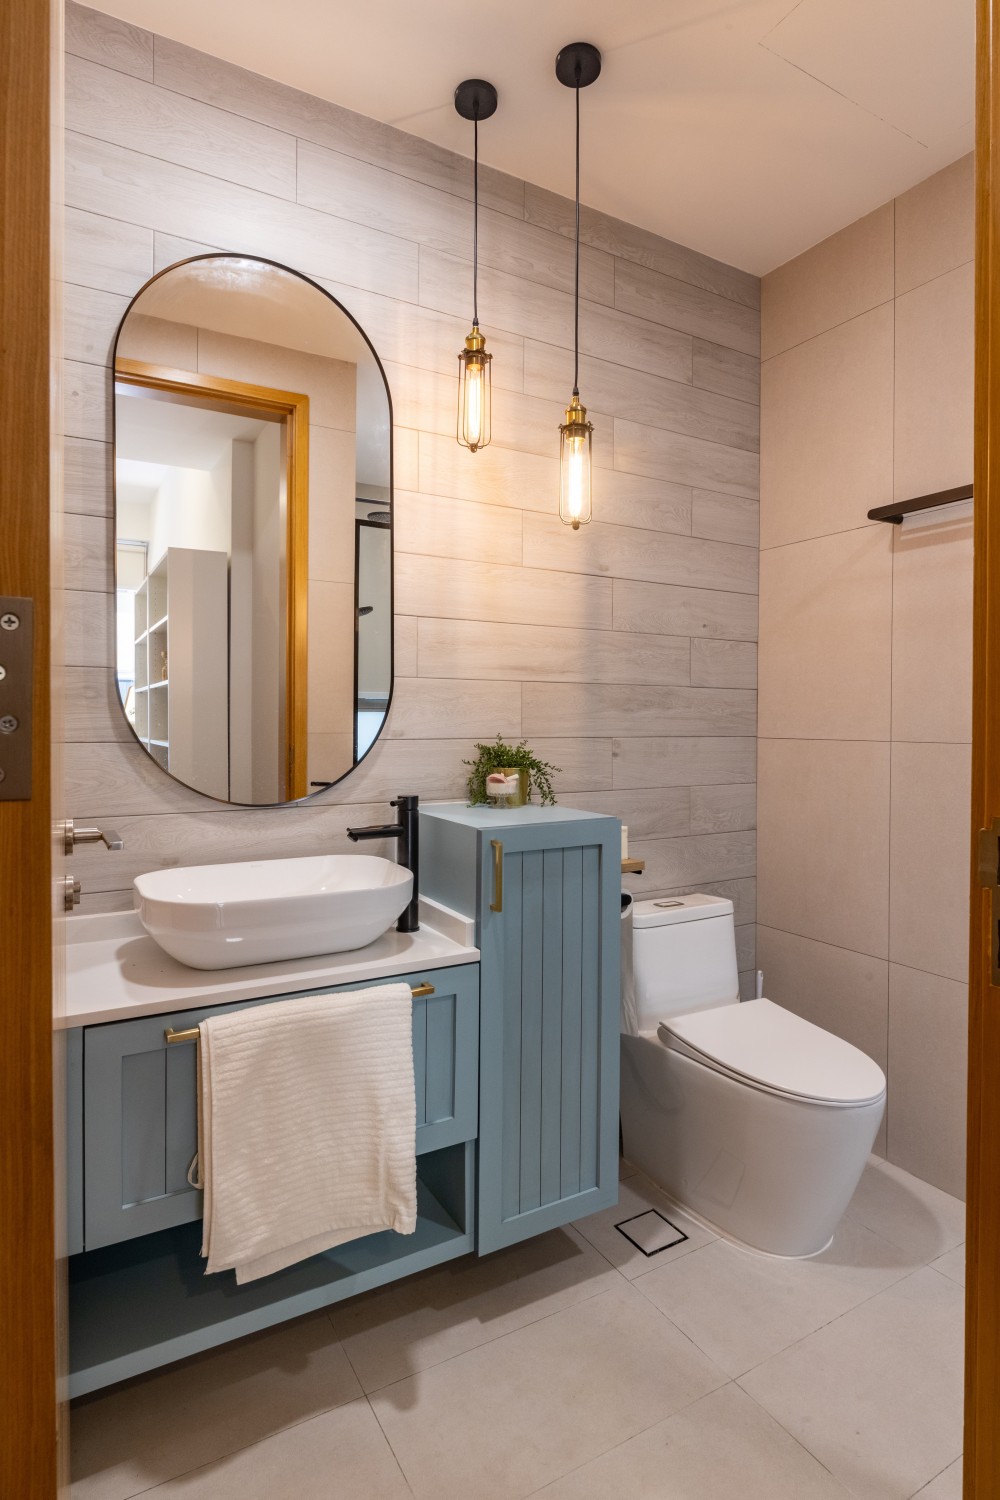 Country, Rustic, Scandinavian Design - Bathroom - Condominium - Design by Livspace